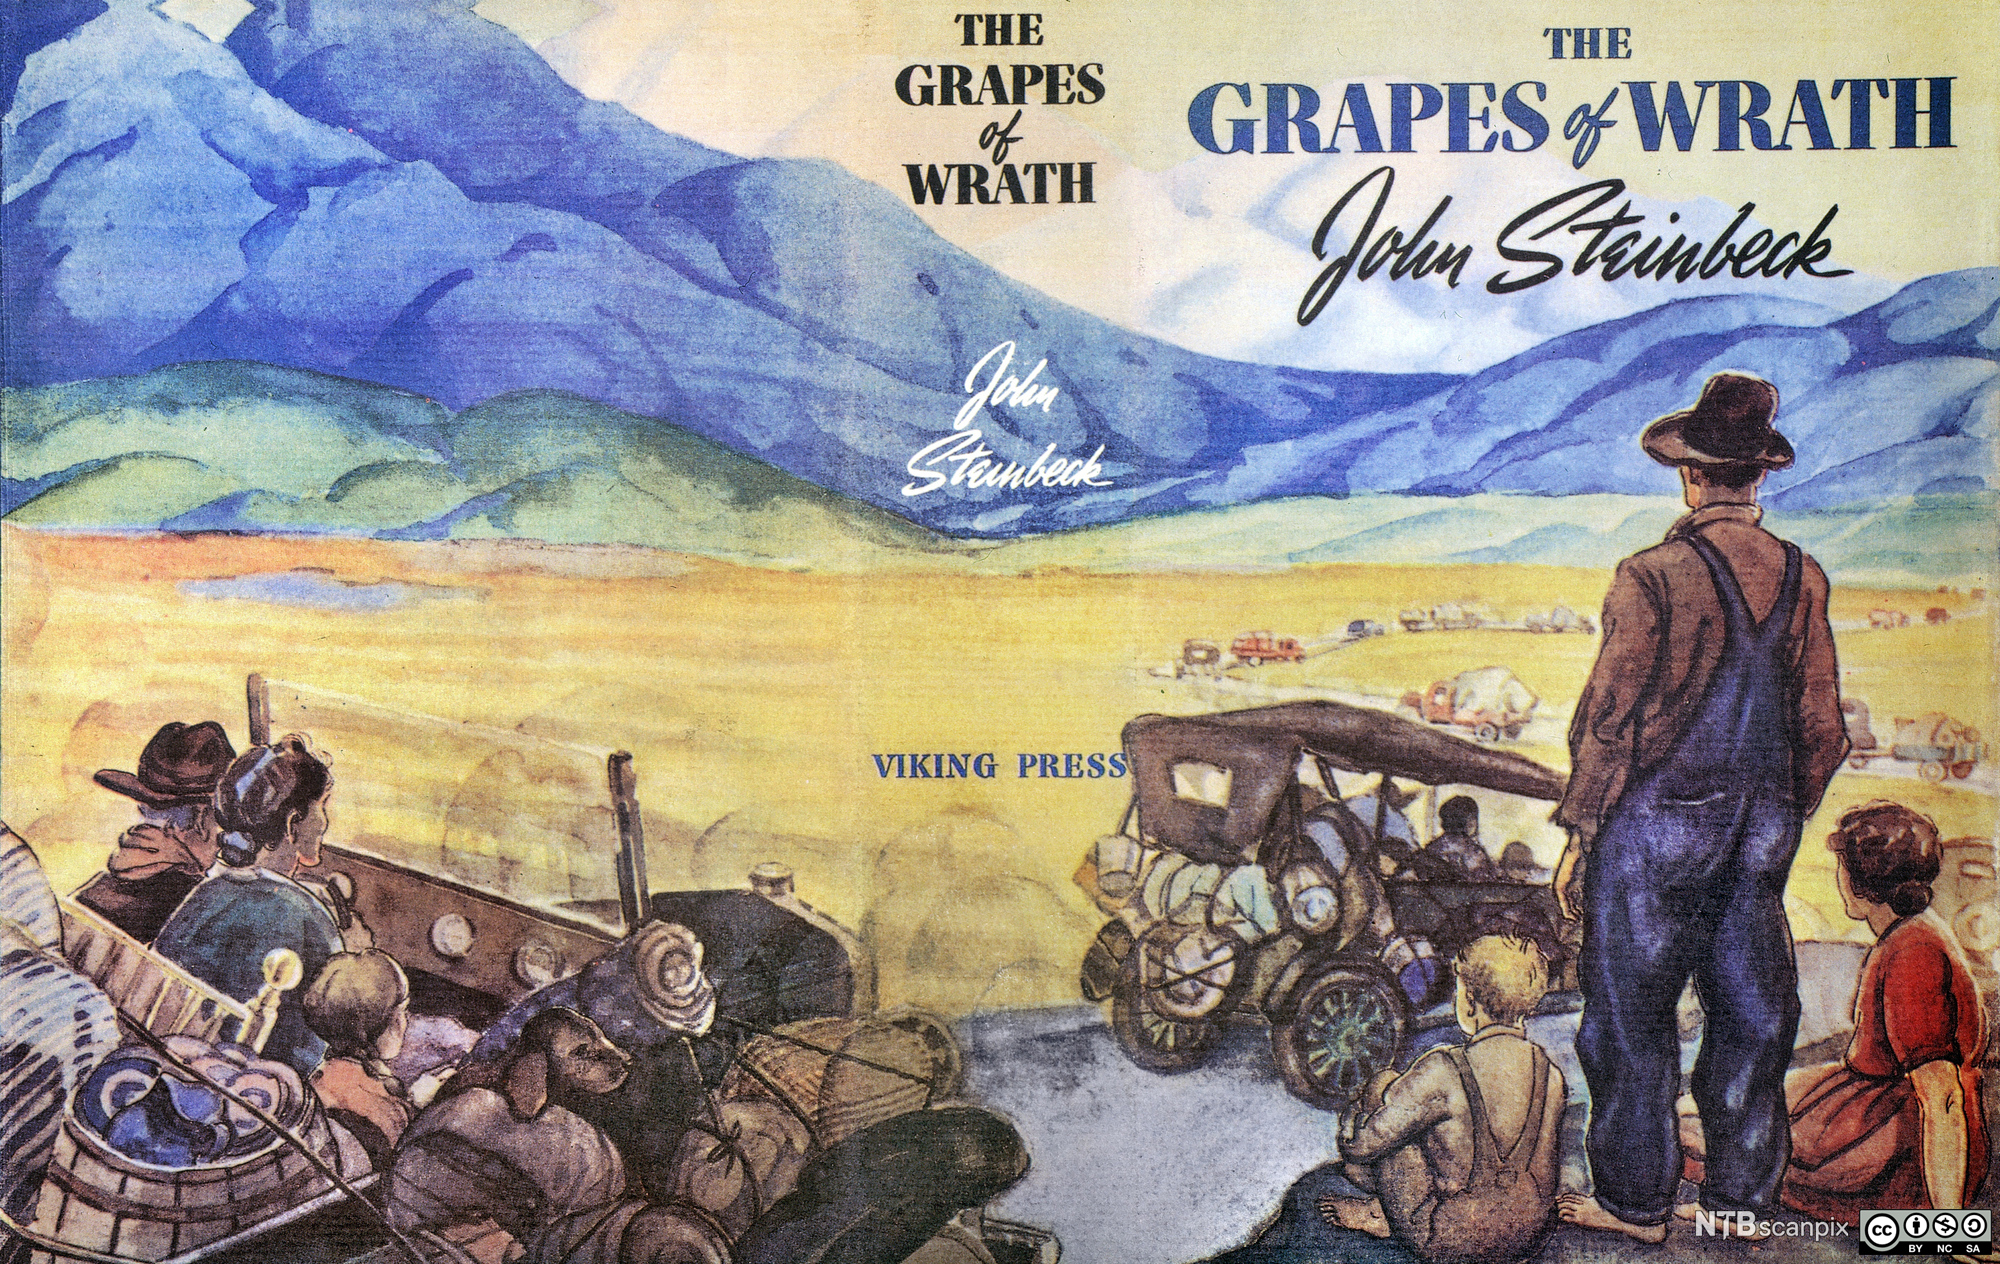 John Steinbeck: The Grapes of Wrath - Engelskspråklig litteratur og kultur (LK06) - NDLA